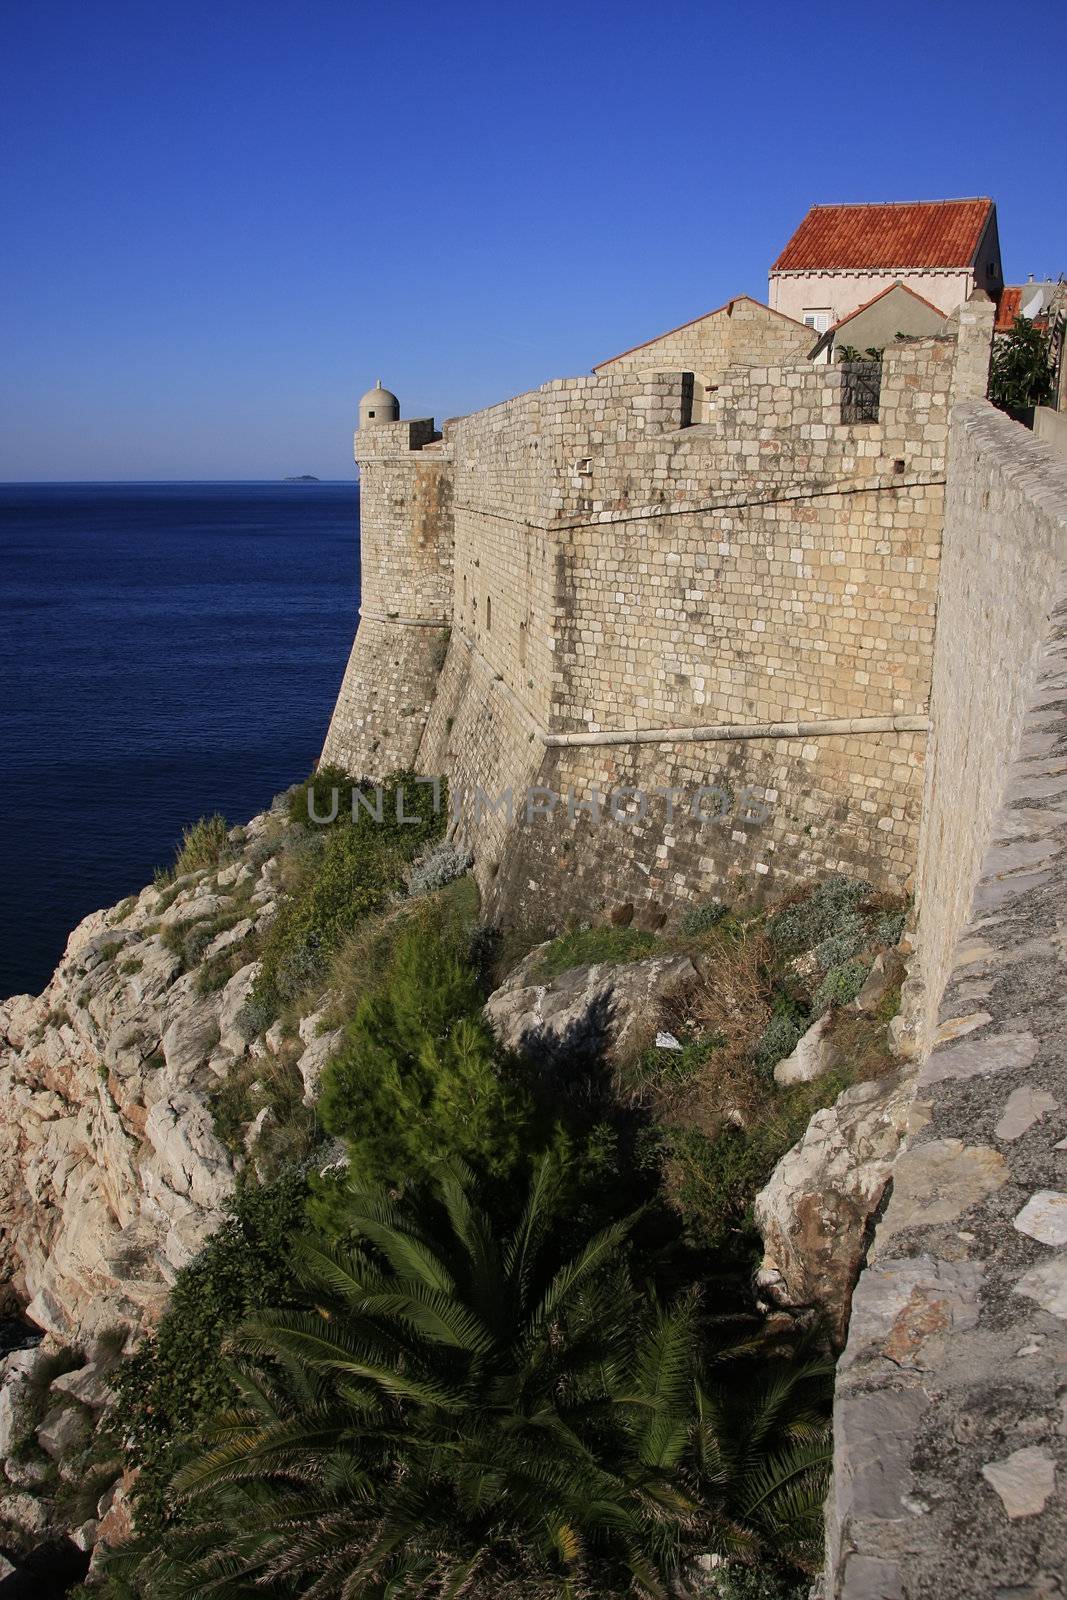 City walls of Dubrovnik, Croatia by donya_nedomam